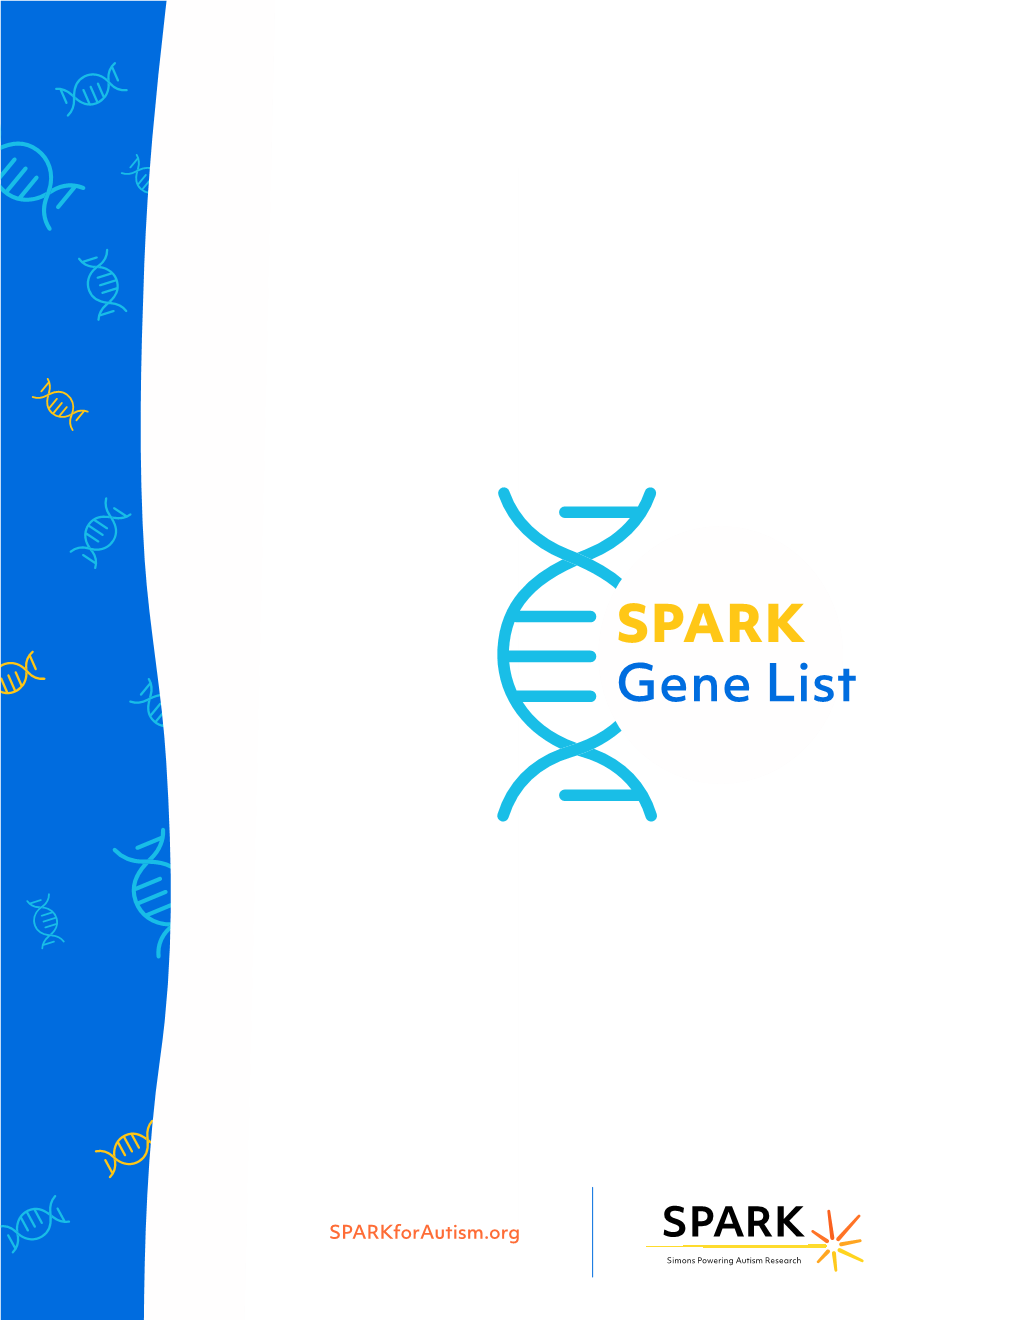 SPARK Gene List